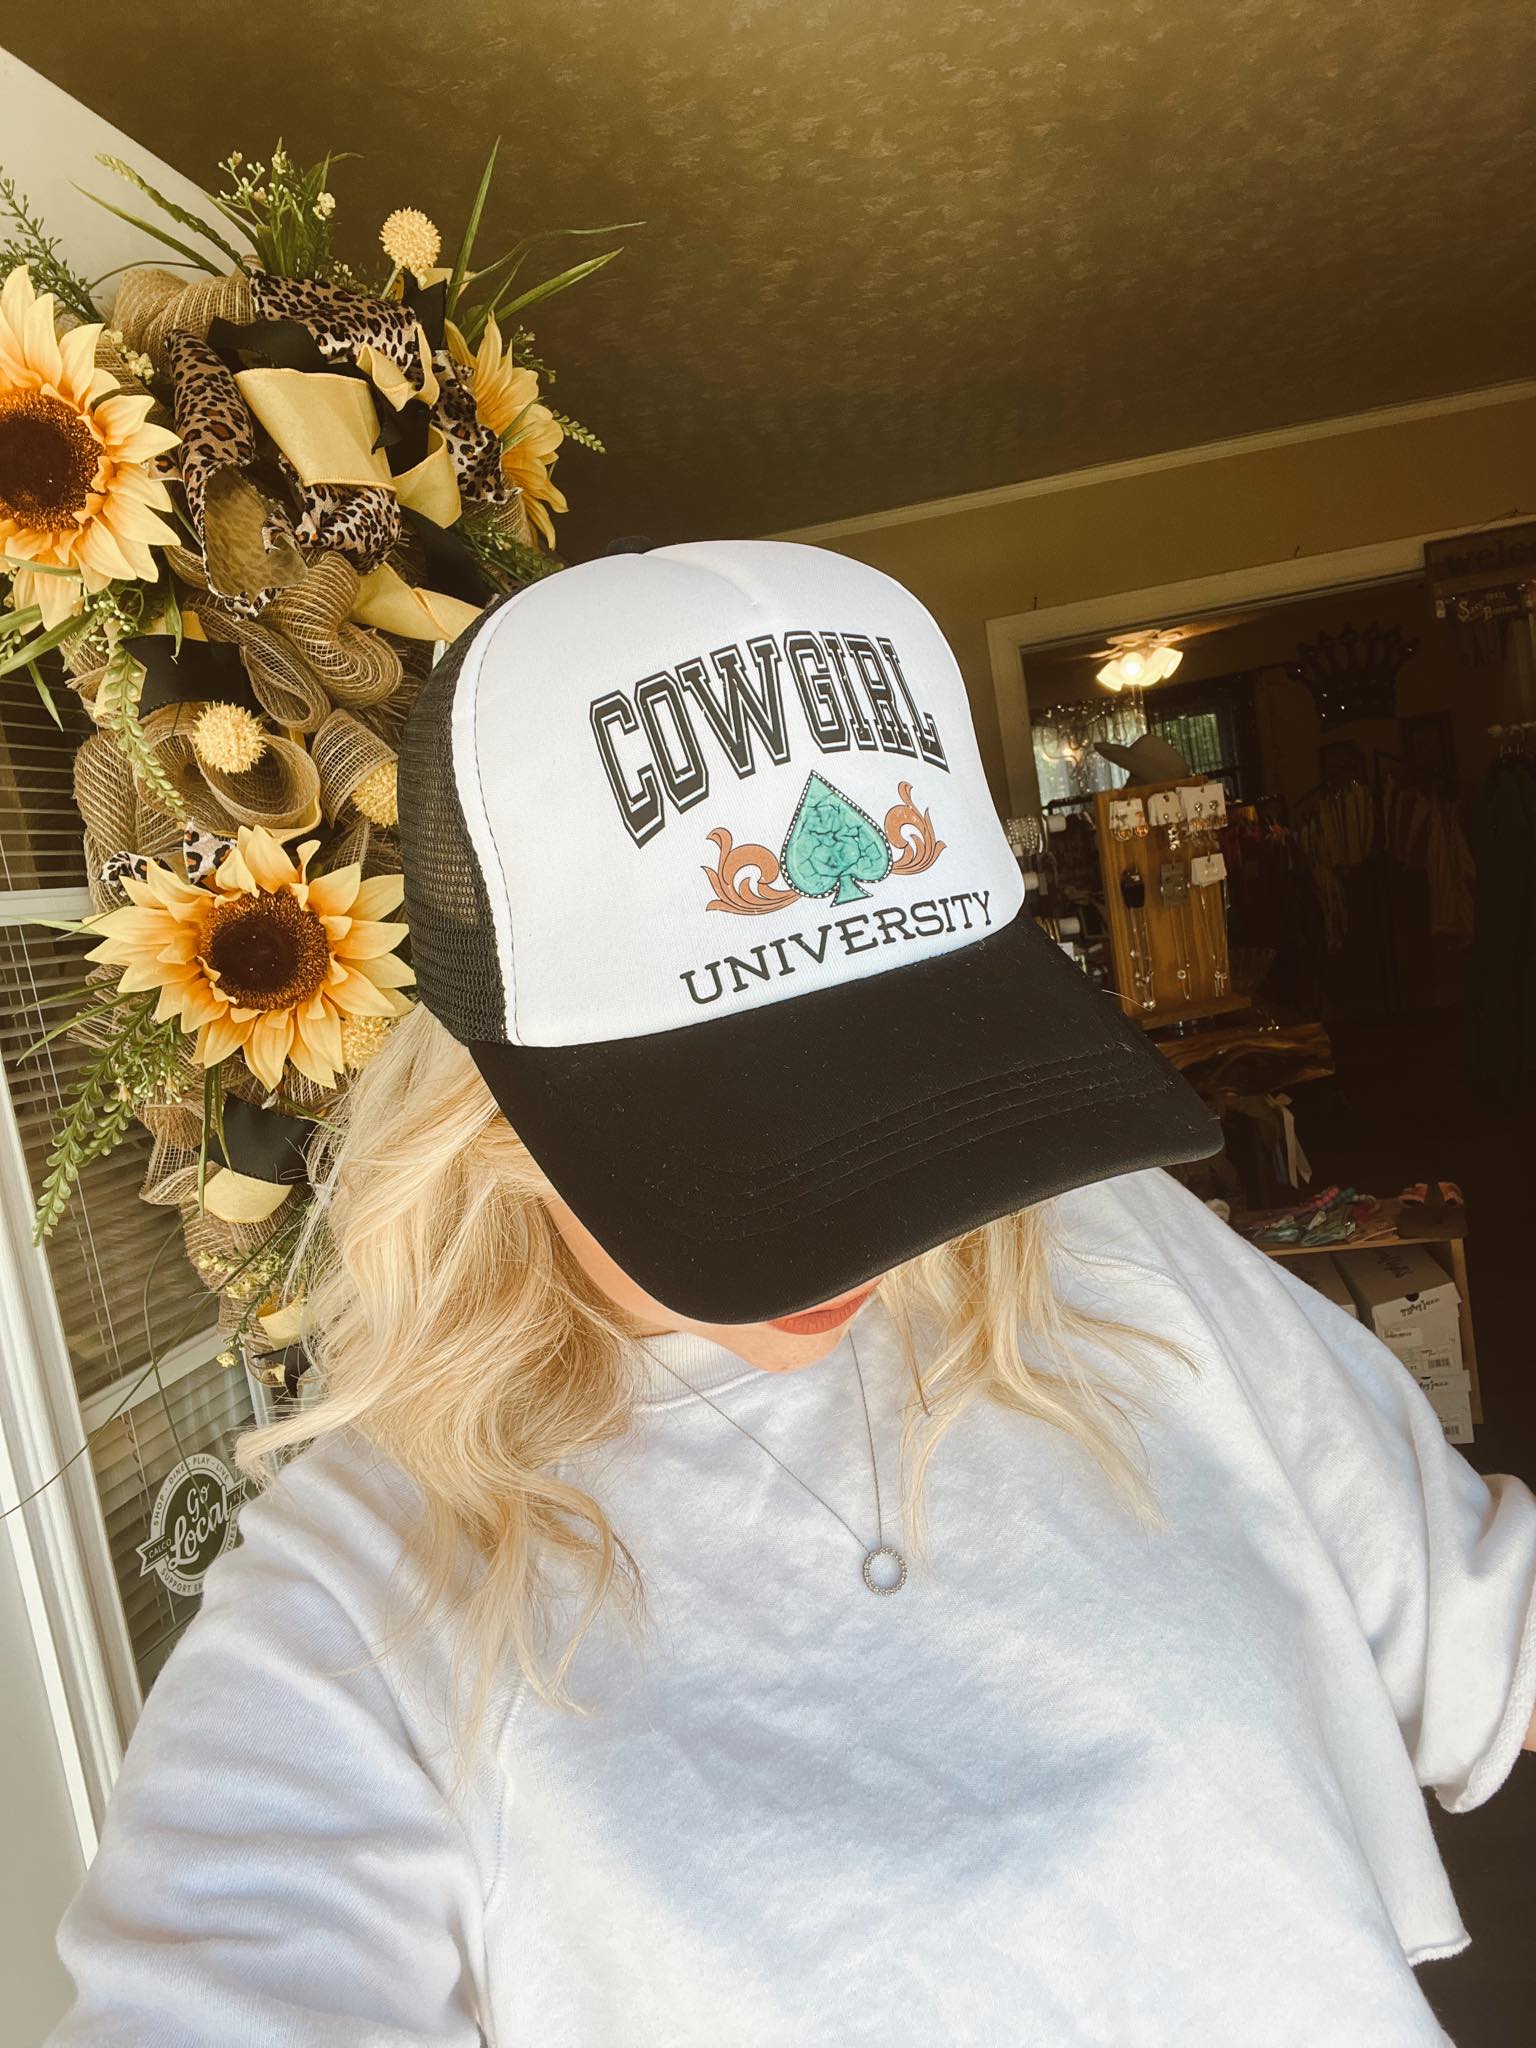 Cowgirl University Hat